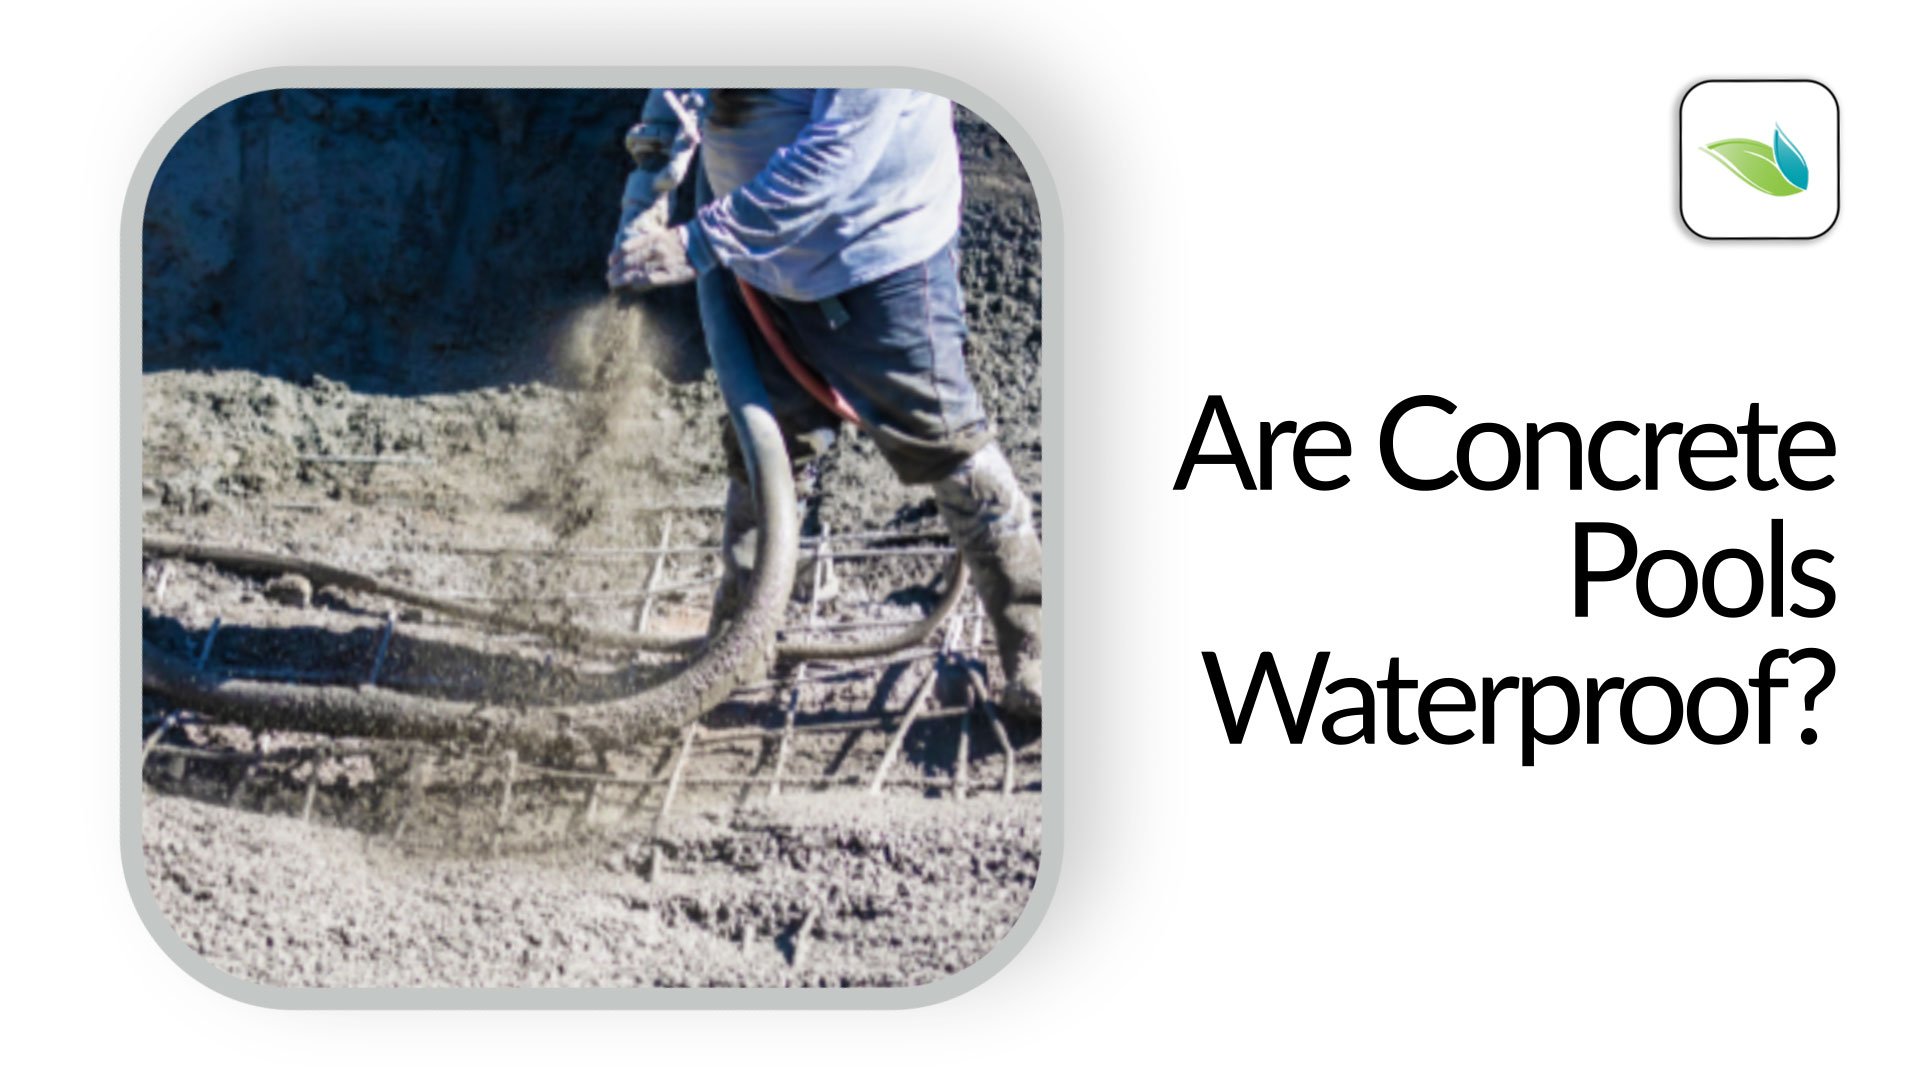 Are Concrete Pools Waterproof?